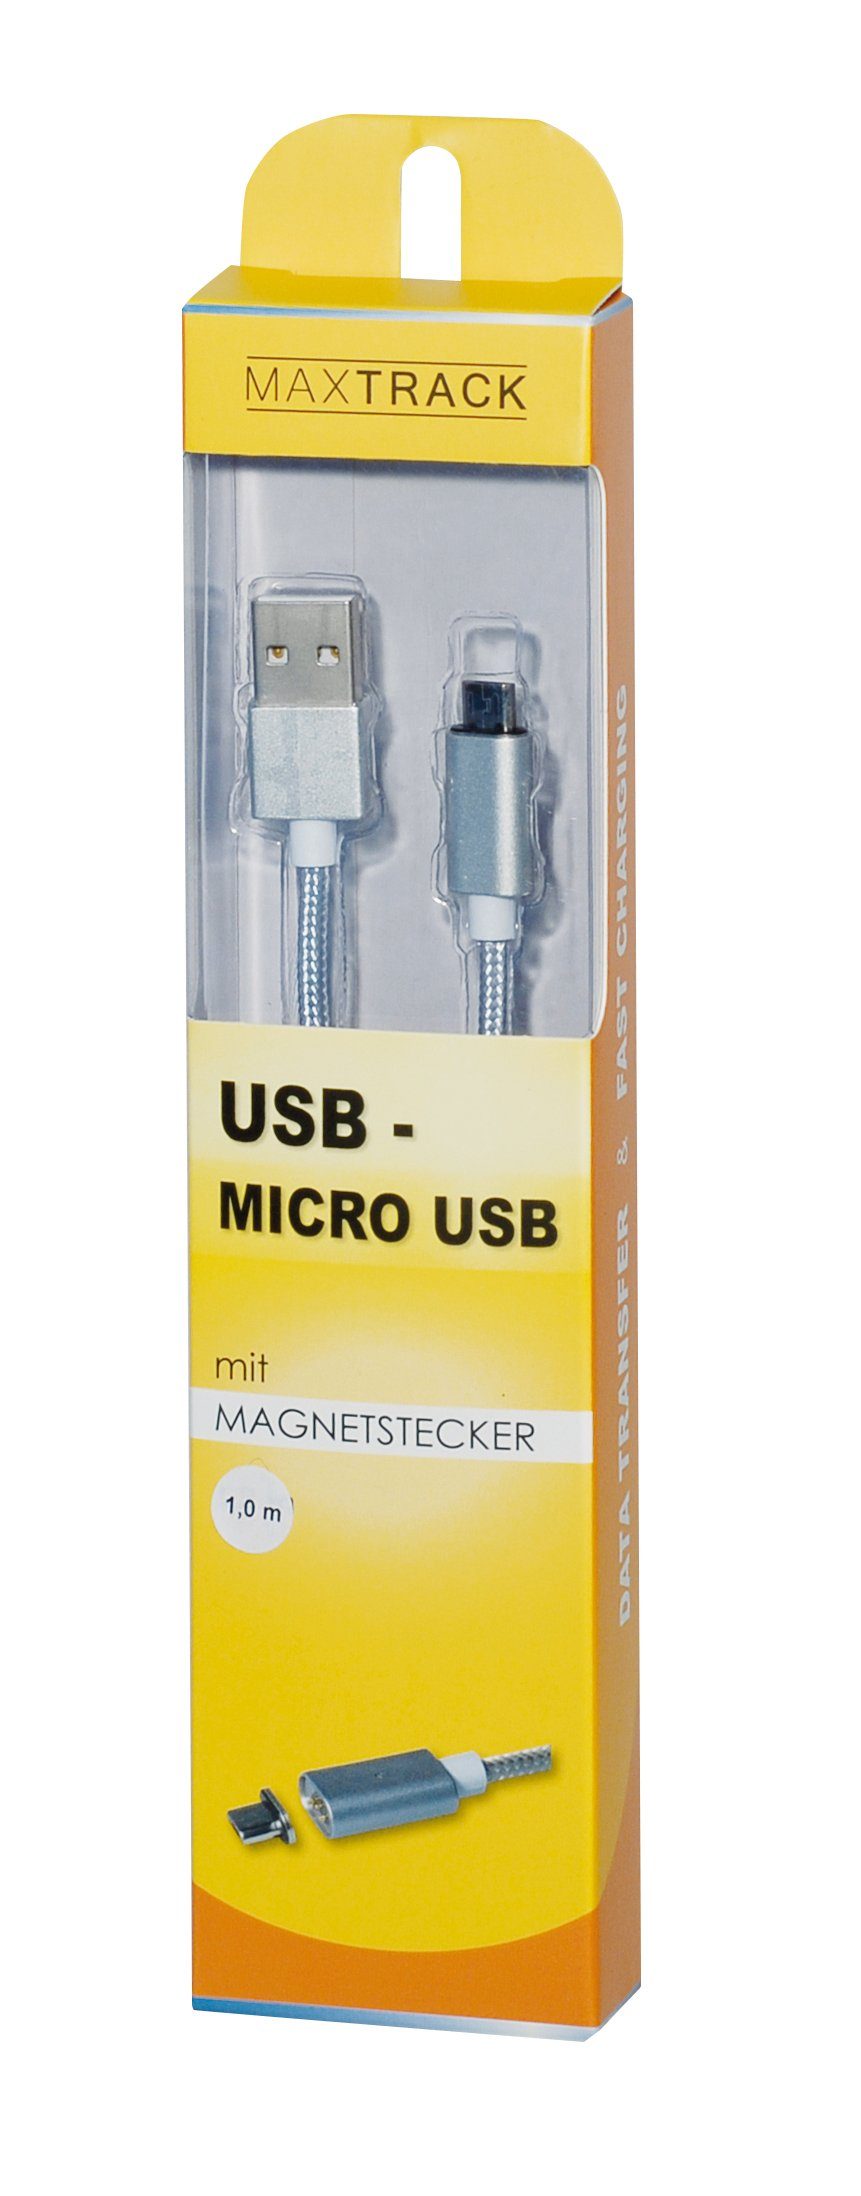 Maxtrack Smartphone-Kabel, USB, USB-A auf Micro USB-B (100 cm), magnetisches USB-Kabel, A-Stecker auf Micro-B-Stecker